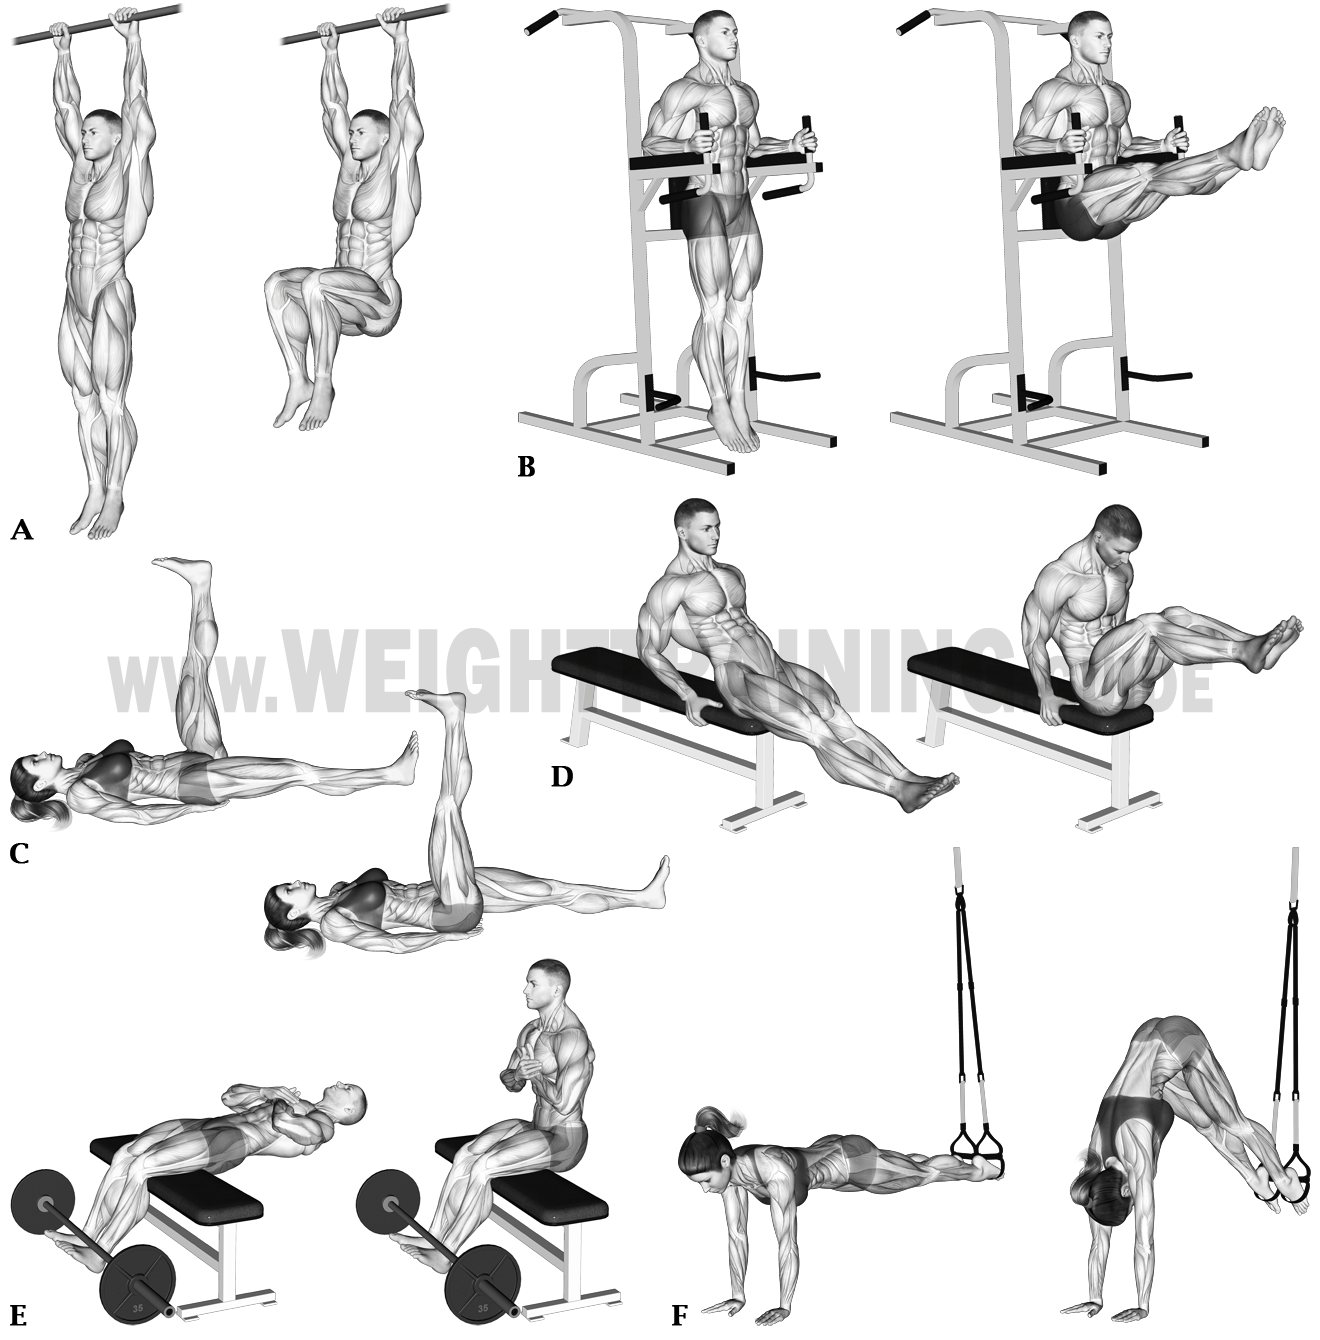 Hip-flexion exercises